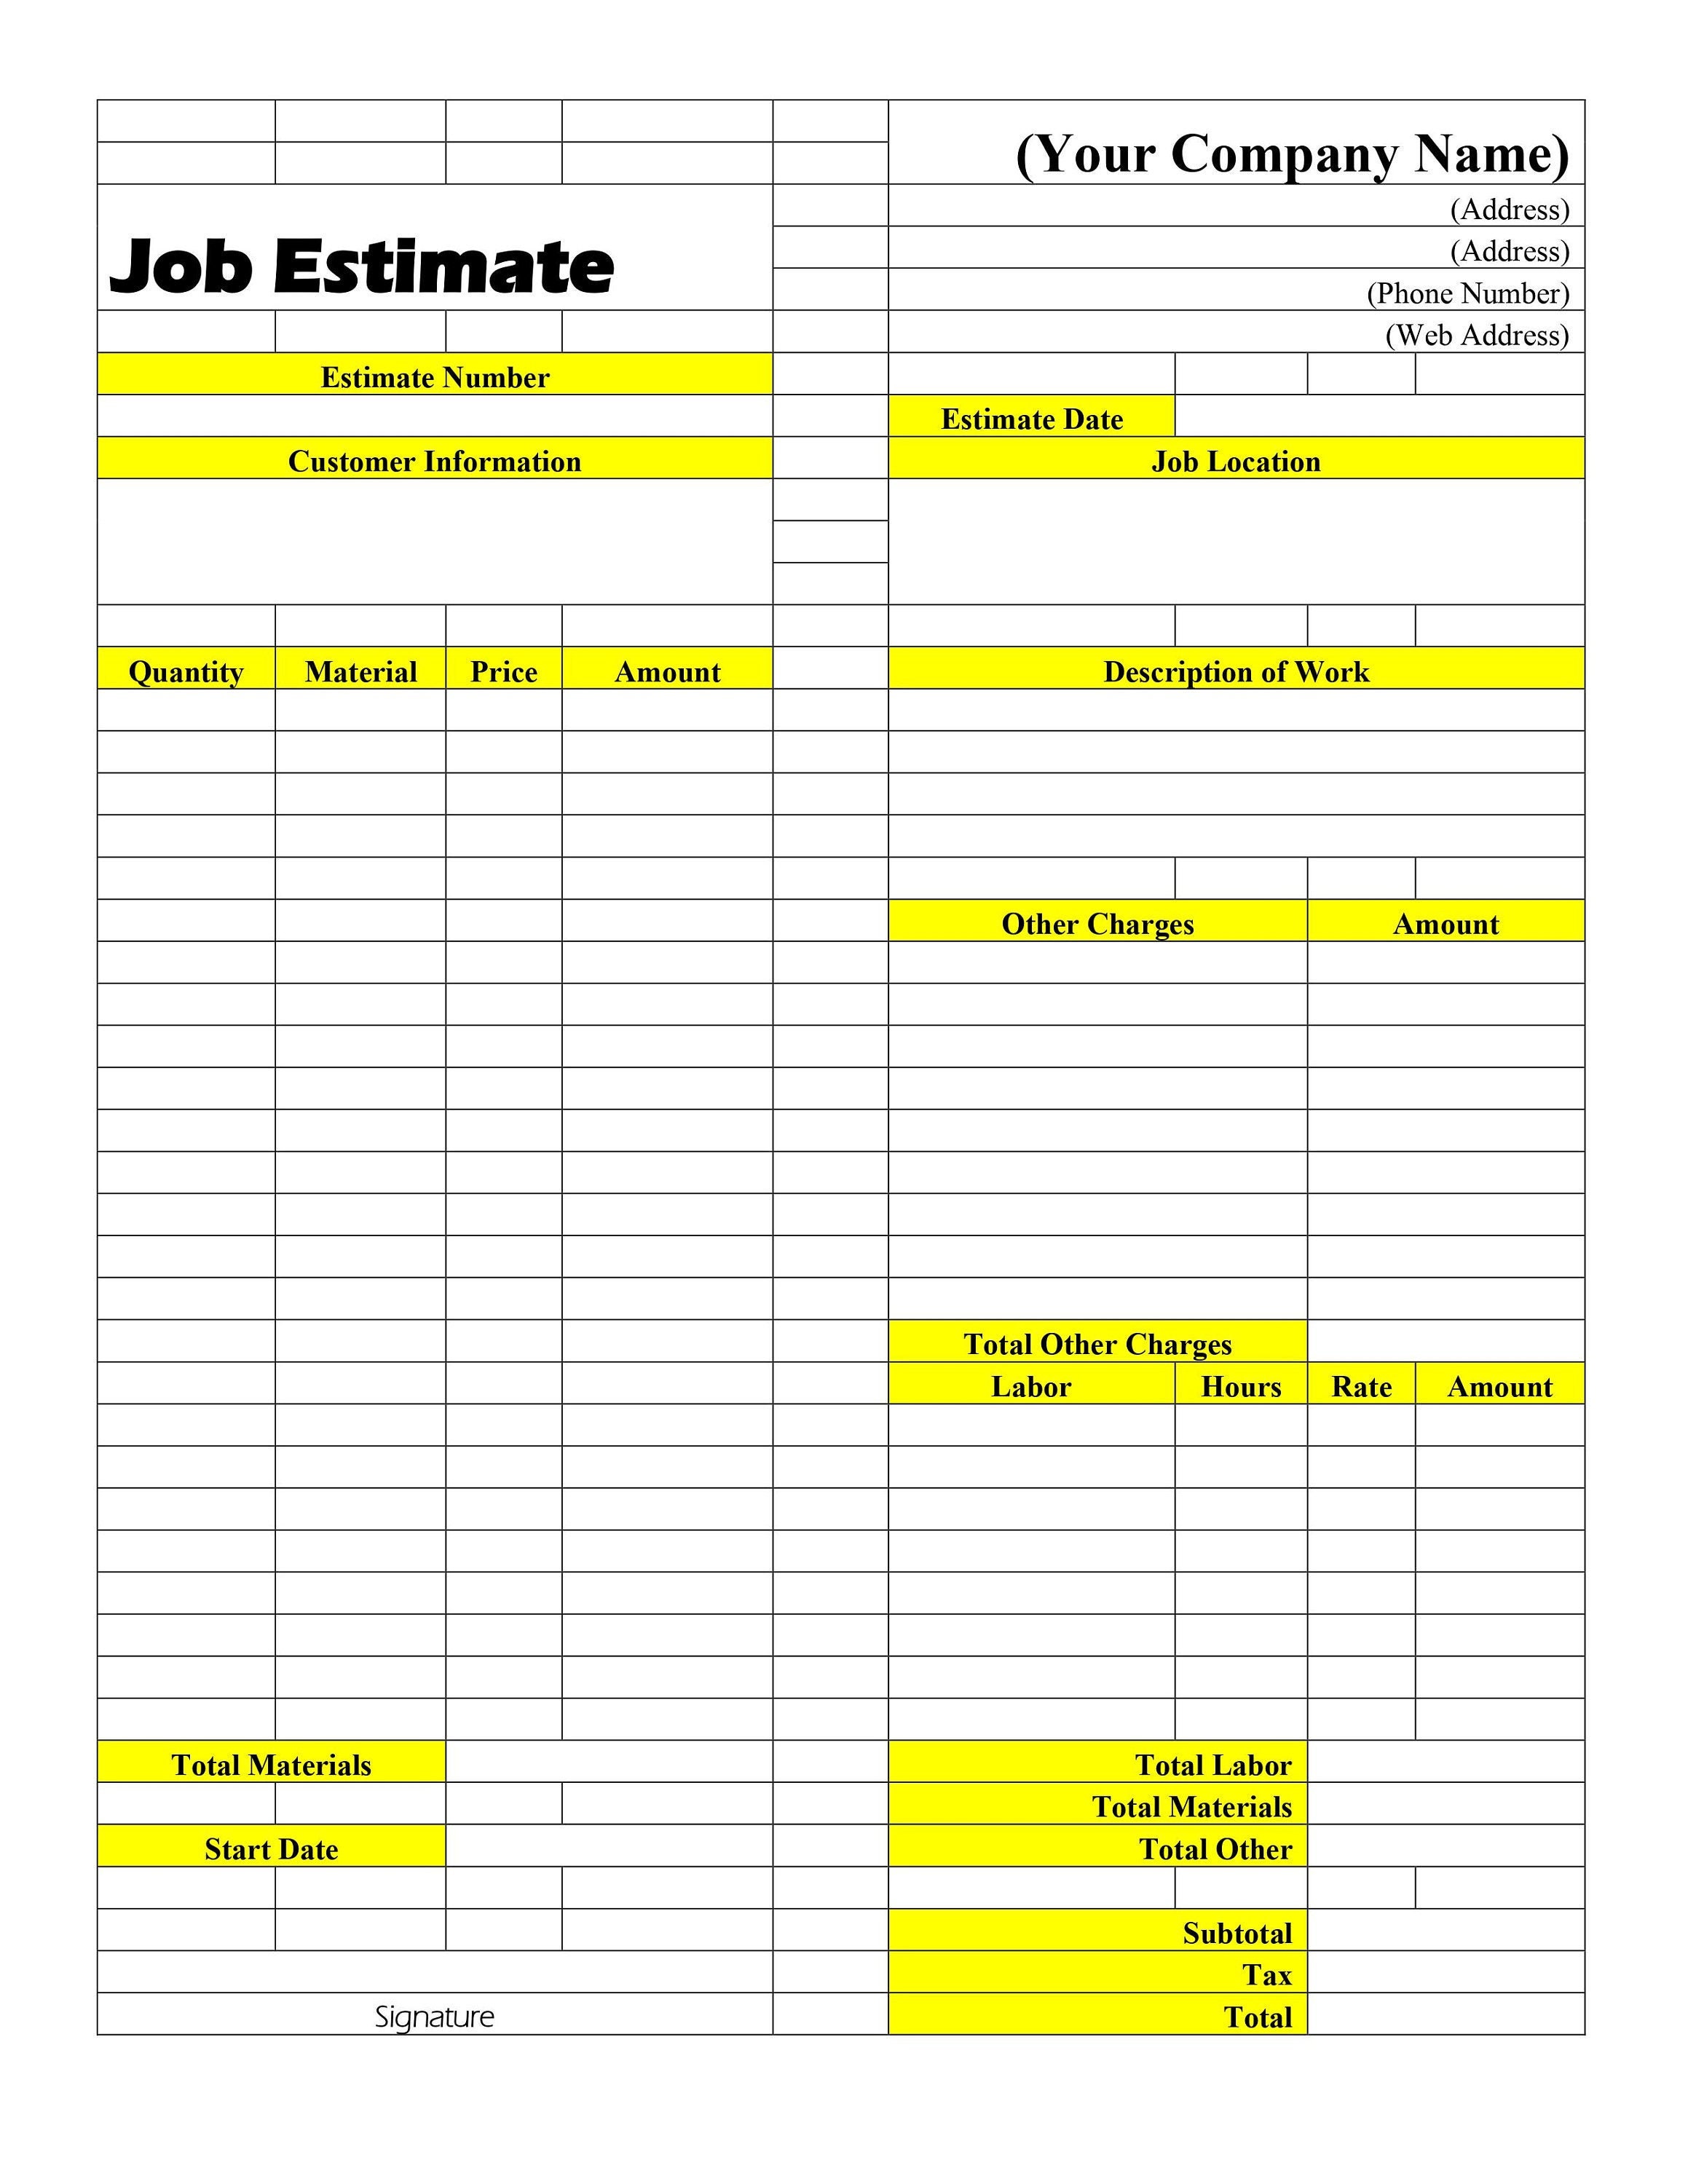 job-estimate-templates-printable-form-by-11-letter-document